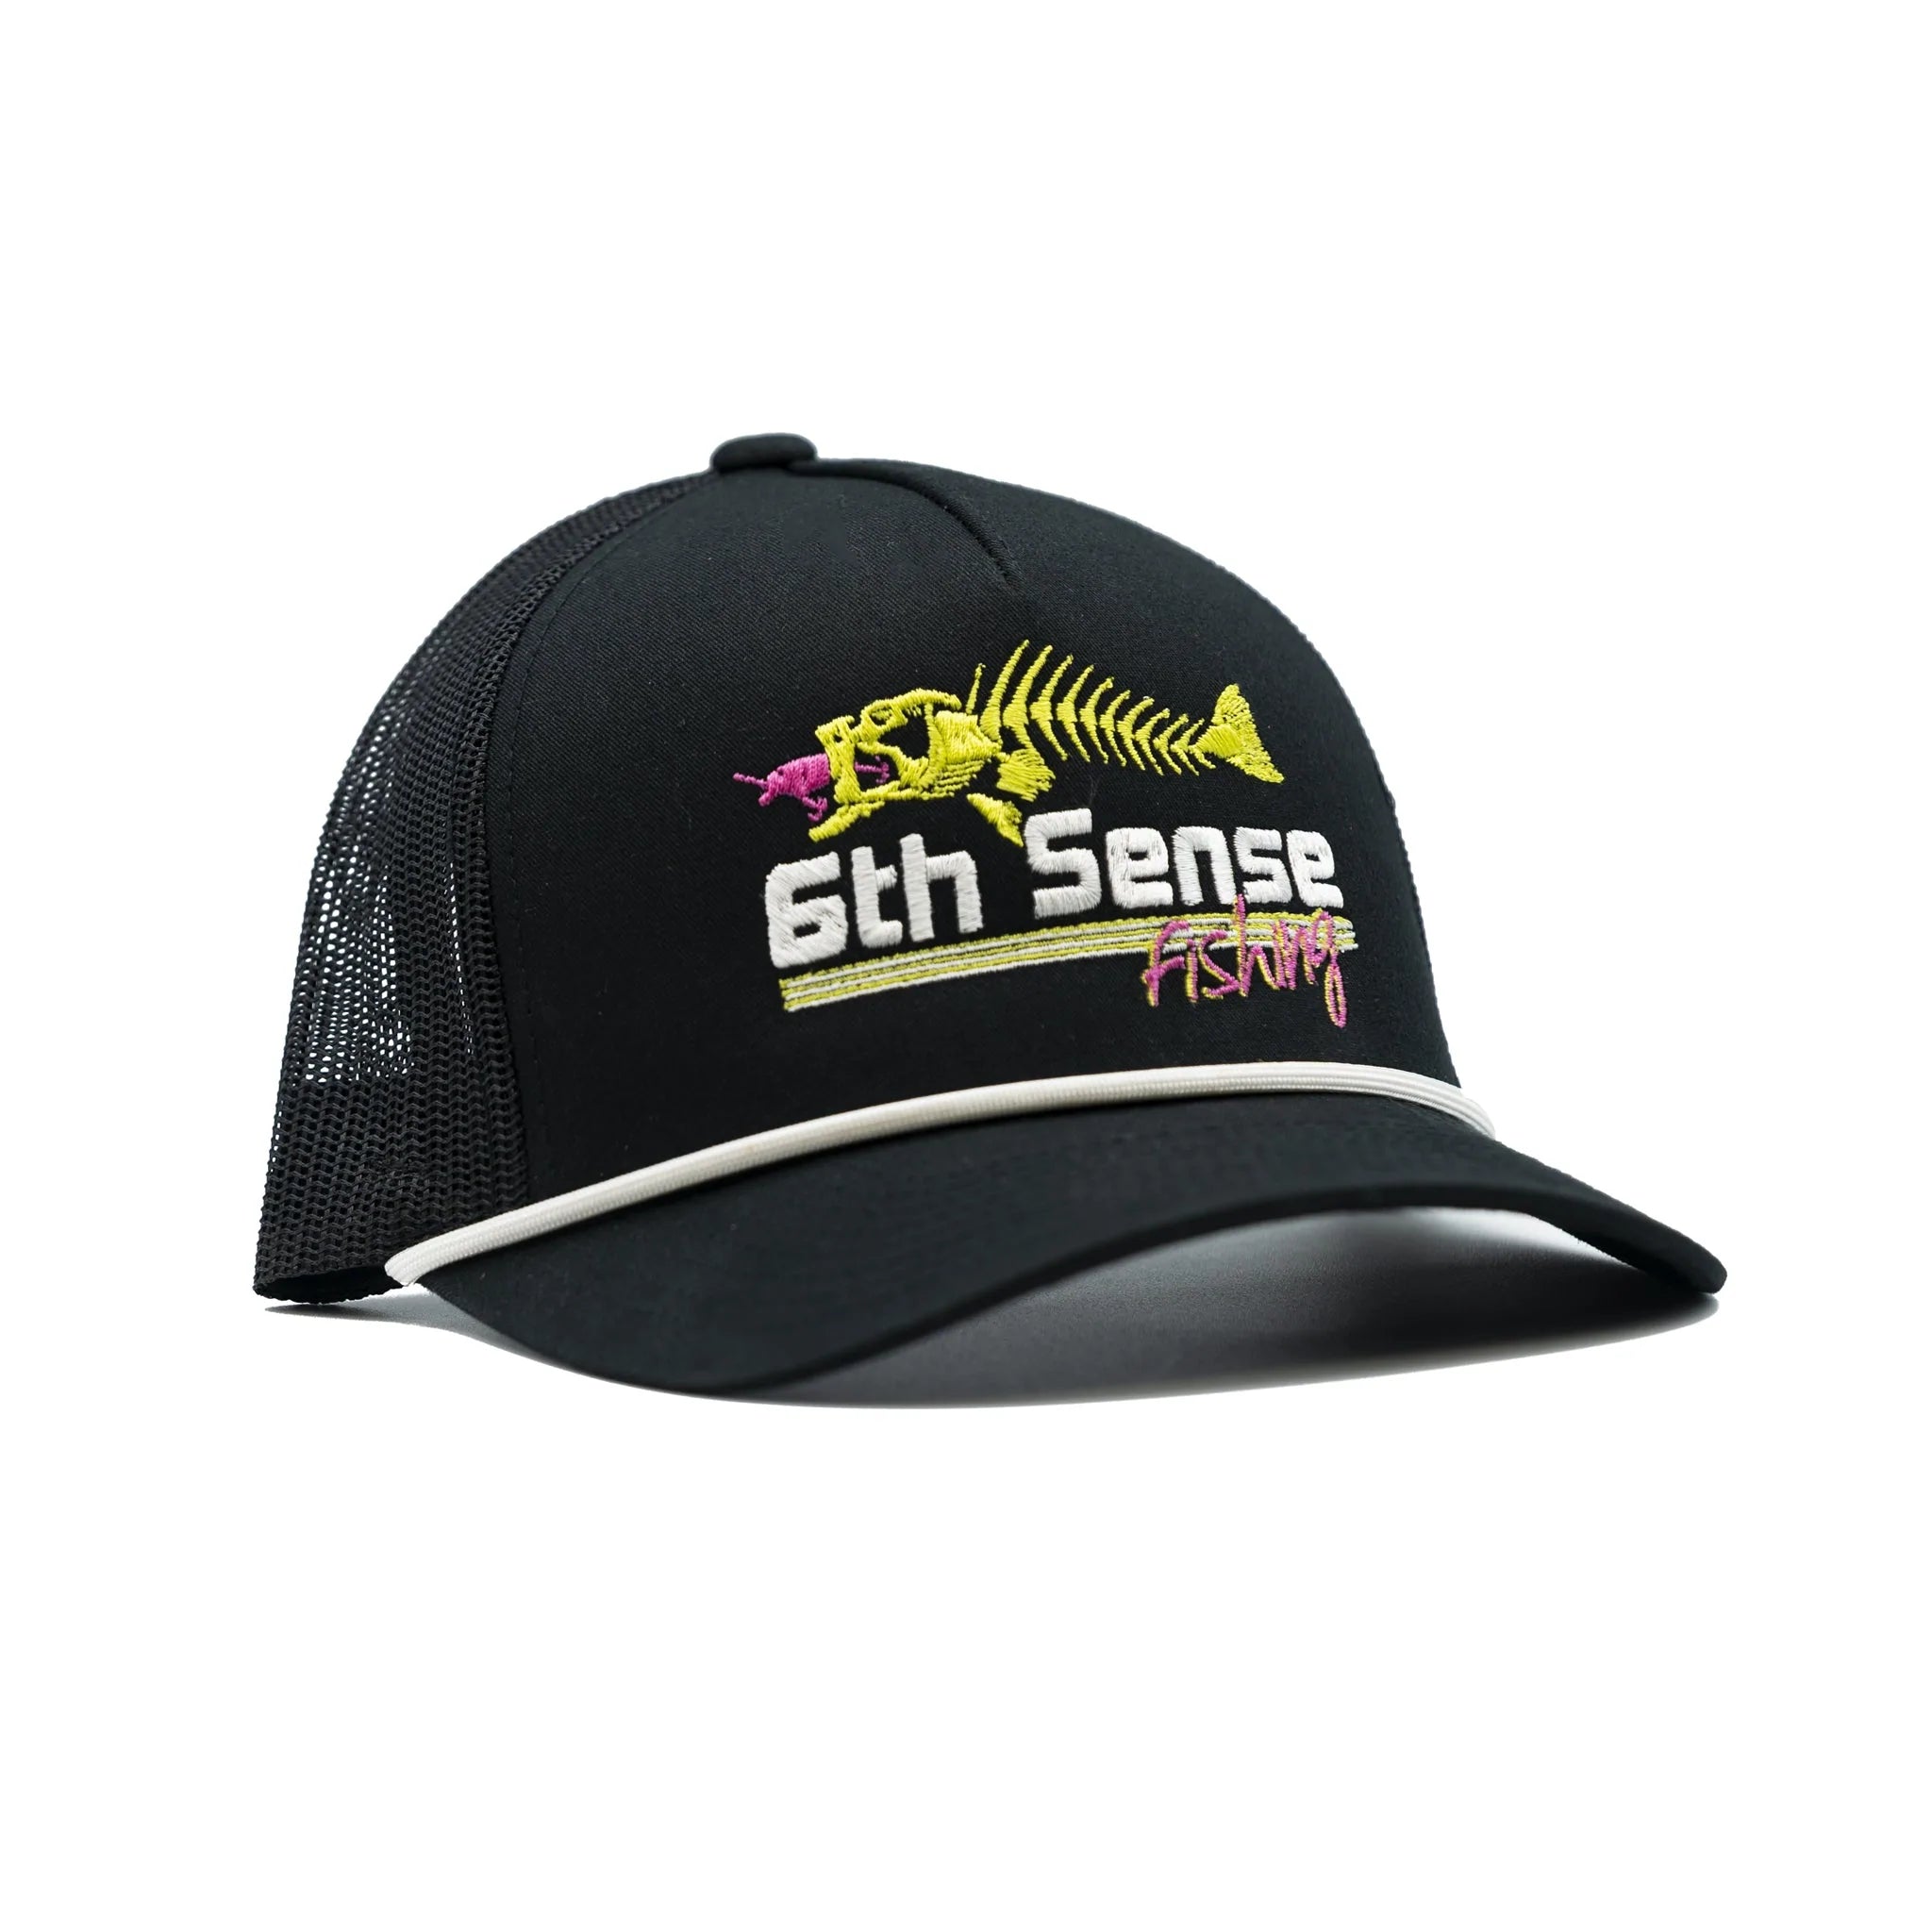 Buy miami-6-rope-black 6TH SENSE HATS